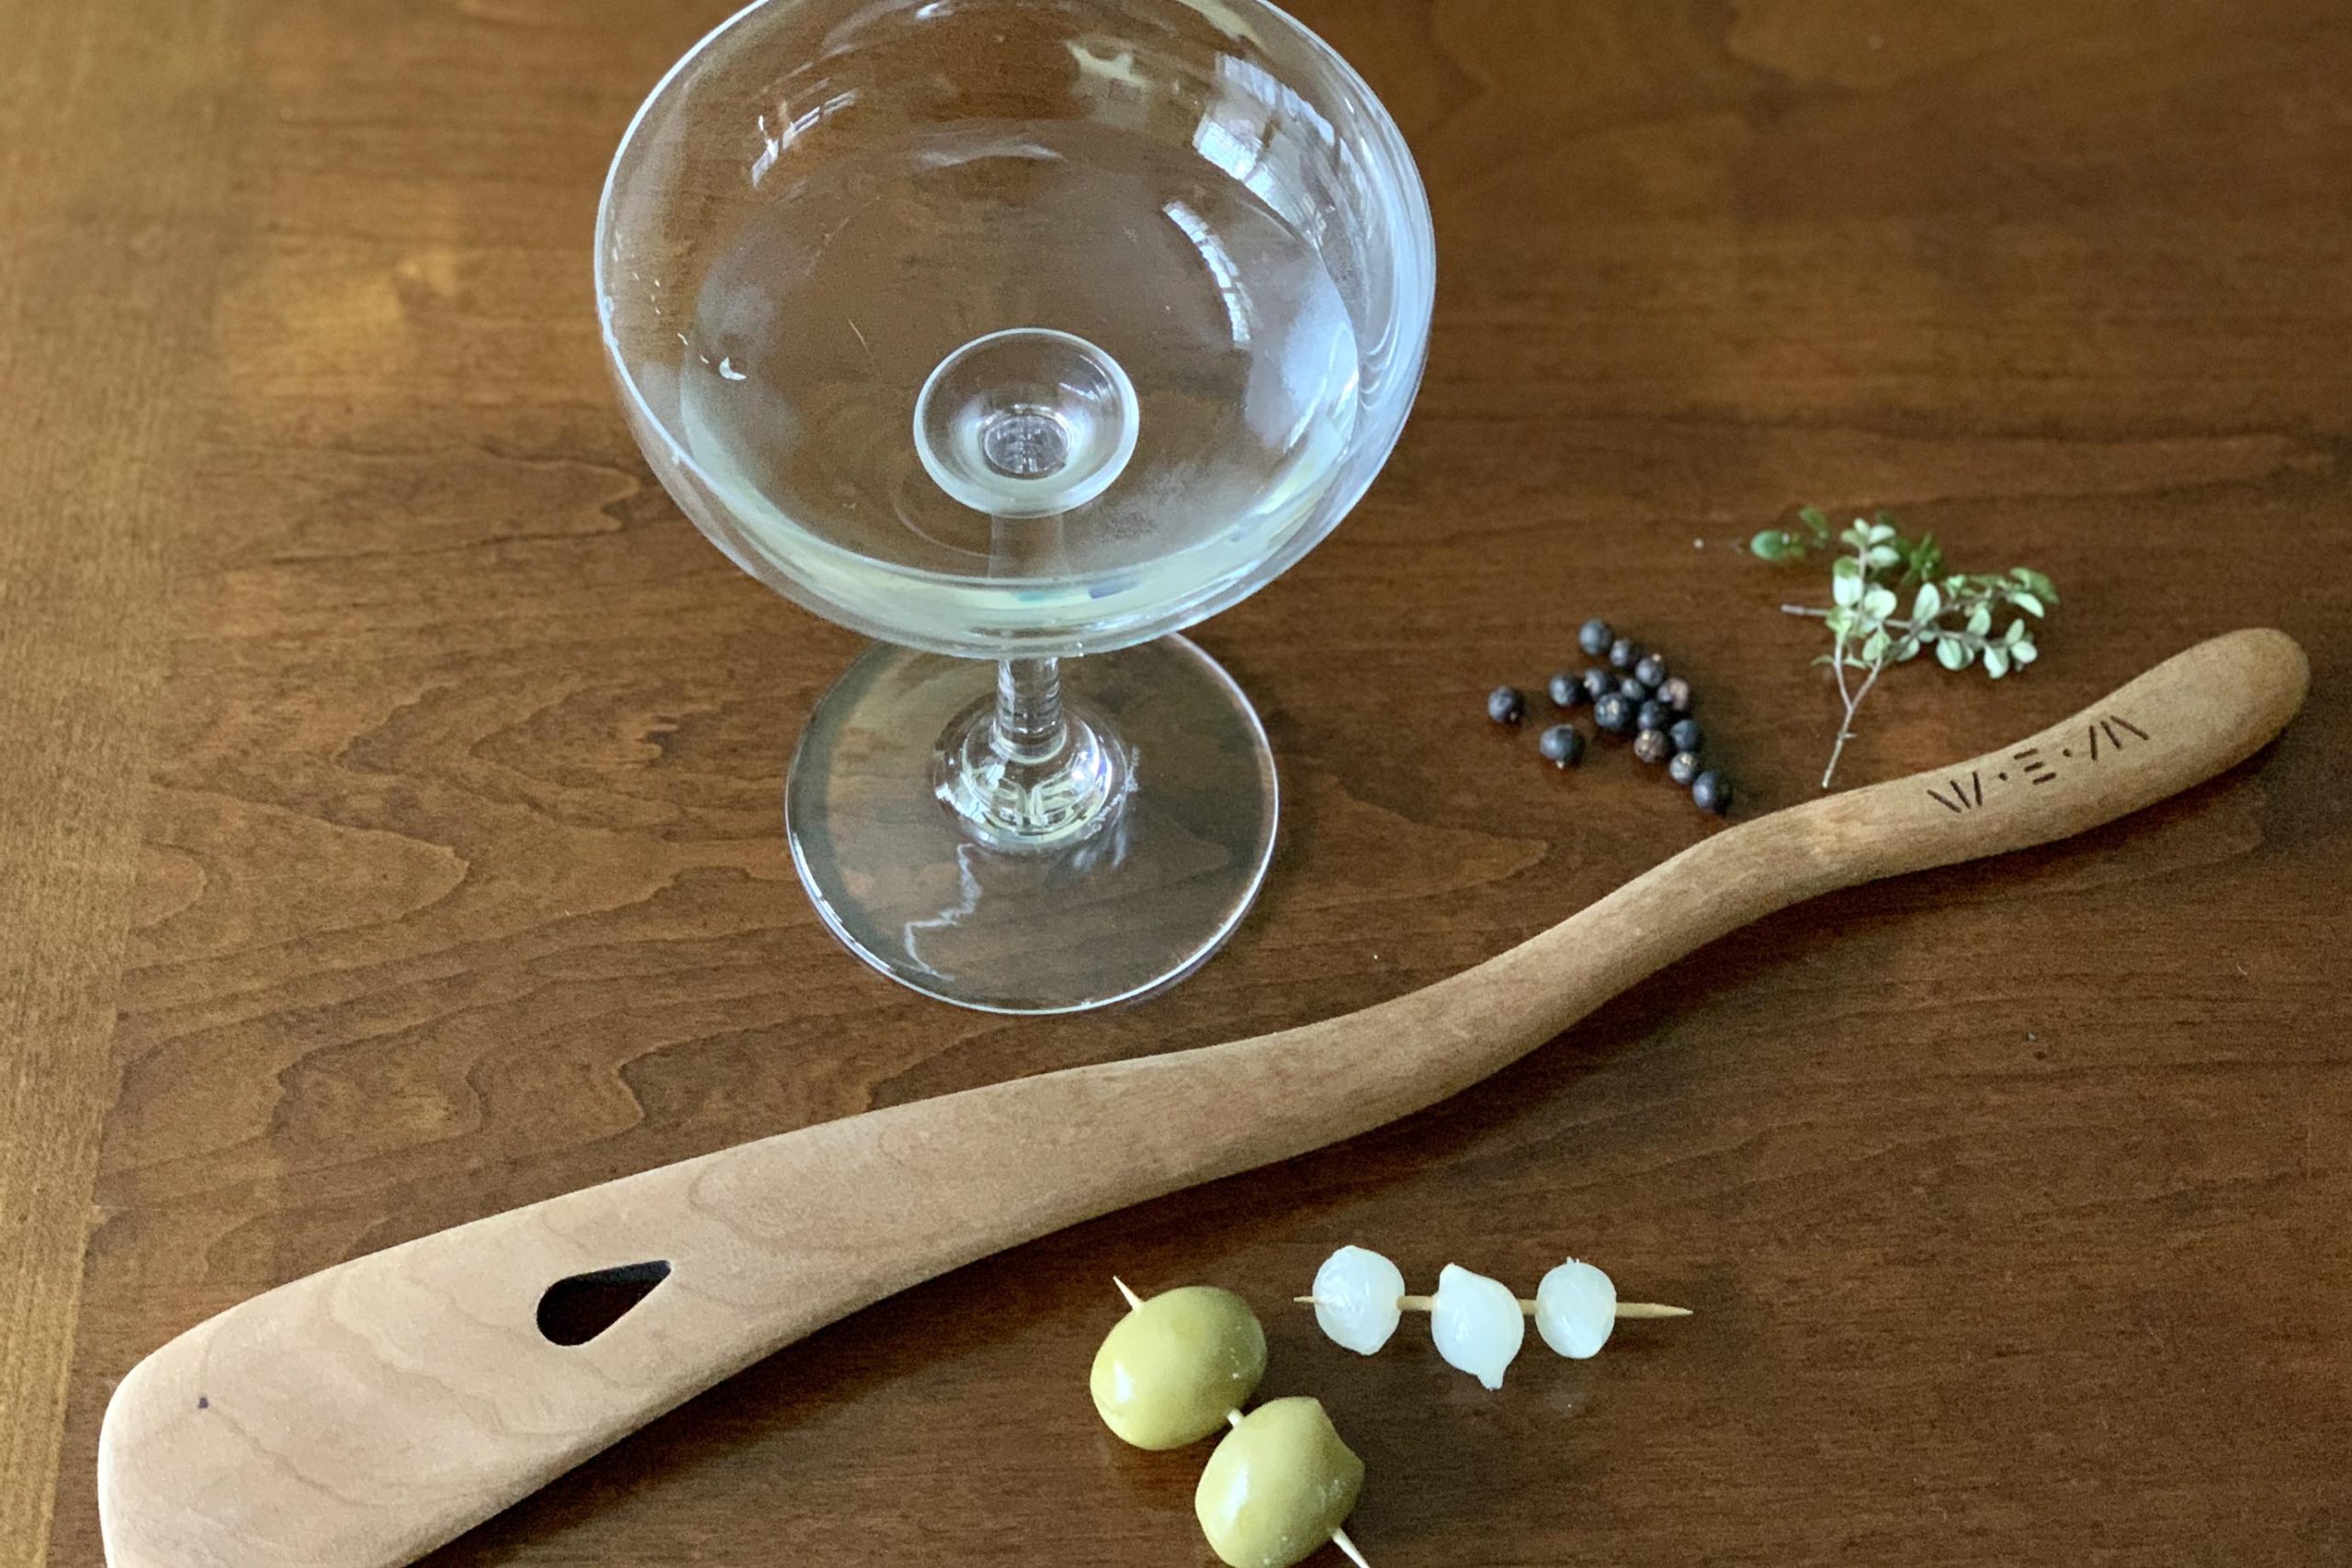 A Martini for Wharton Esherick